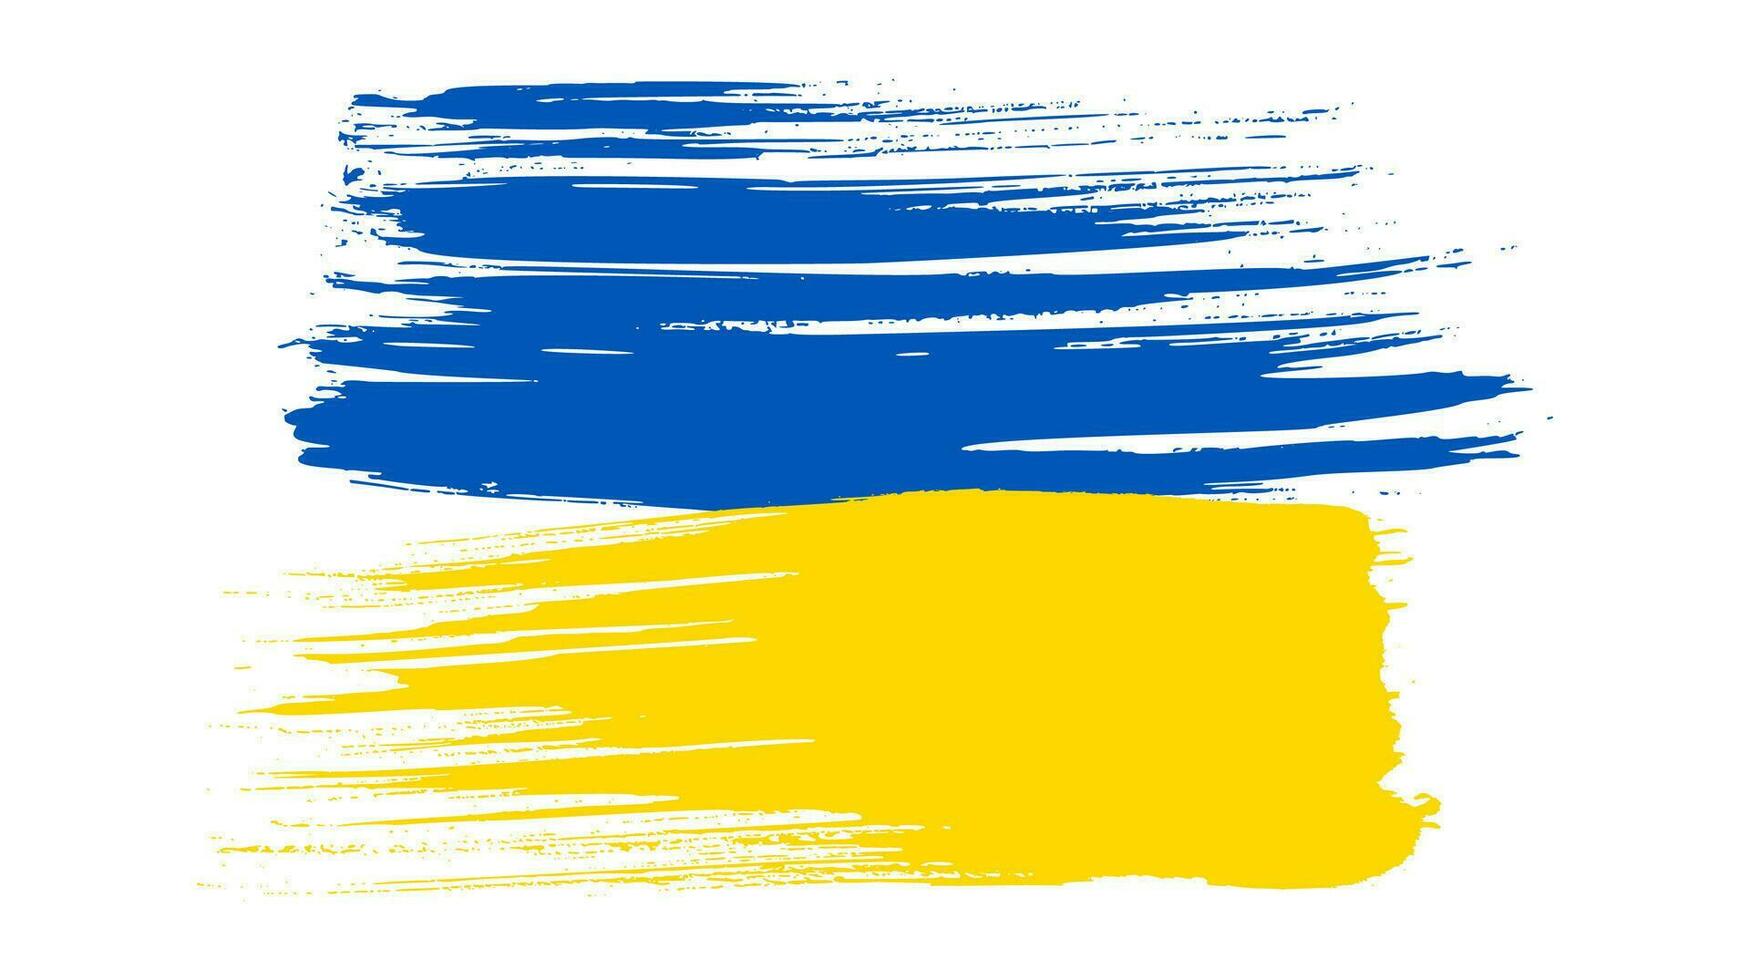 Ukrainian national flag in grunge style vector